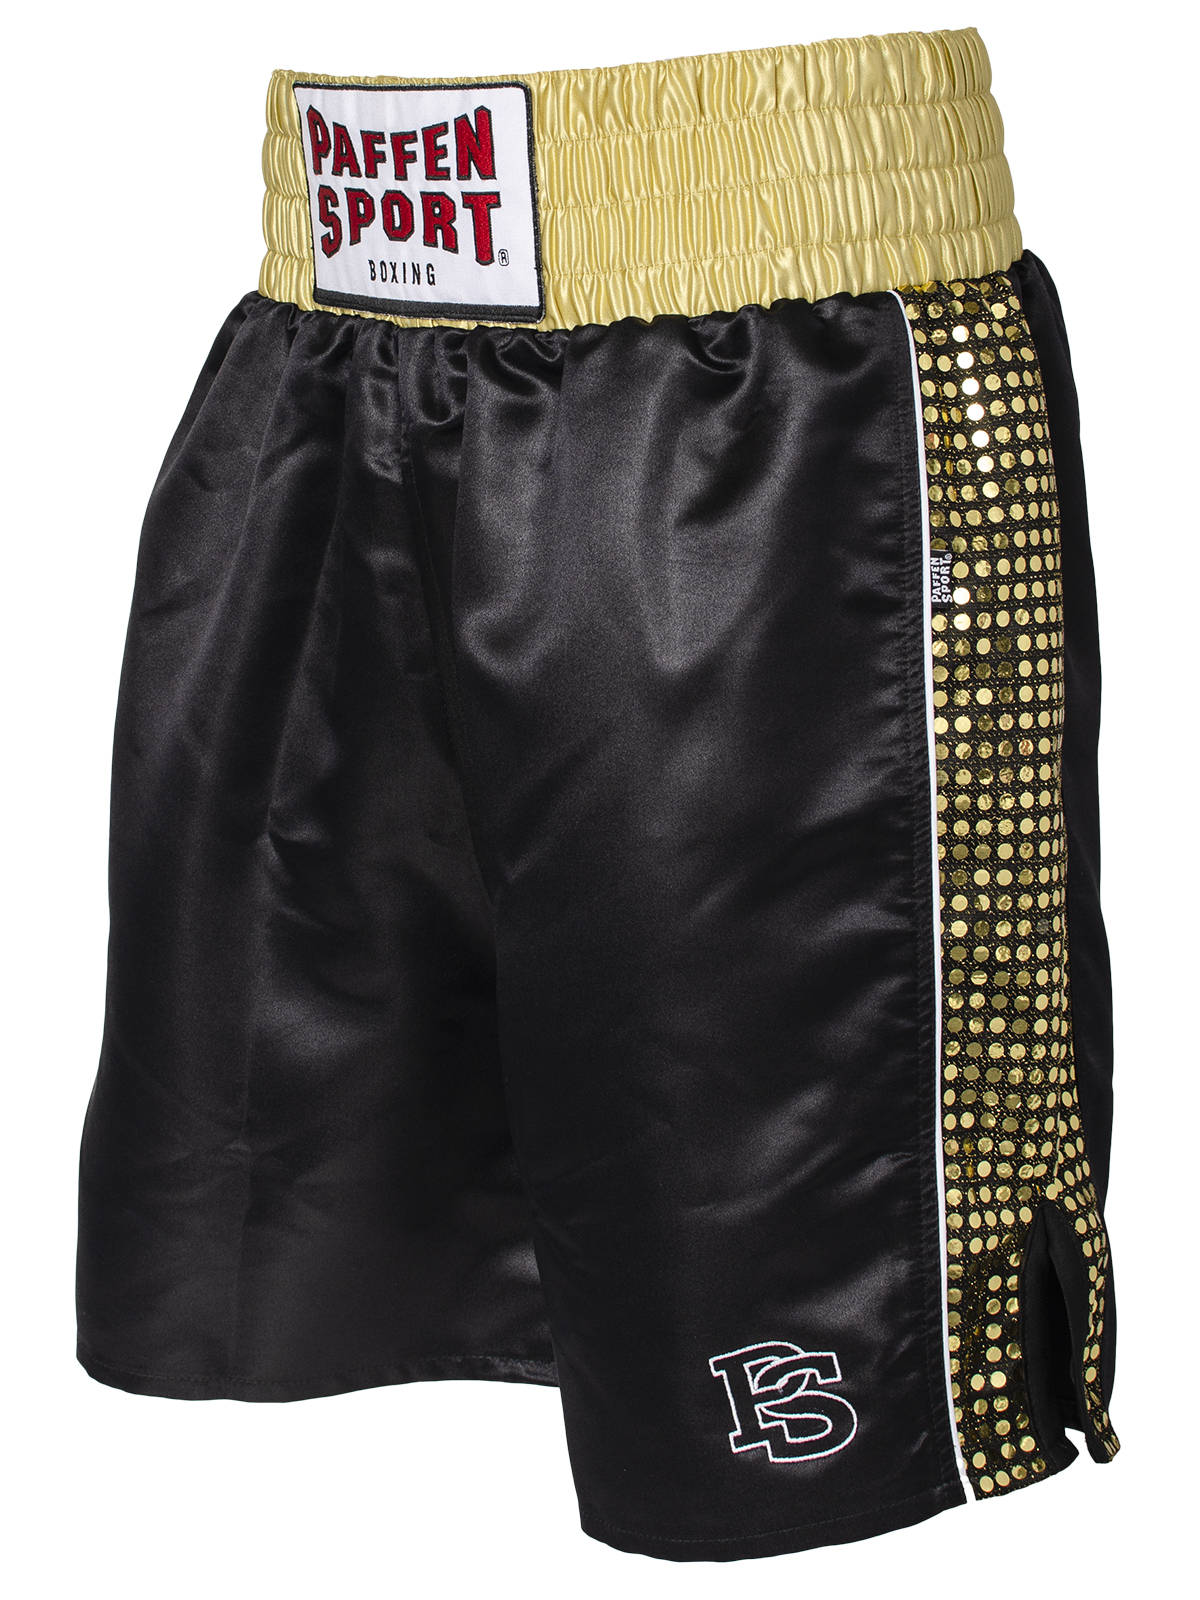 Boxen Boxhose in schwarz oder weiß Boxing Paffen Sport Pro Glory Boxerhose 